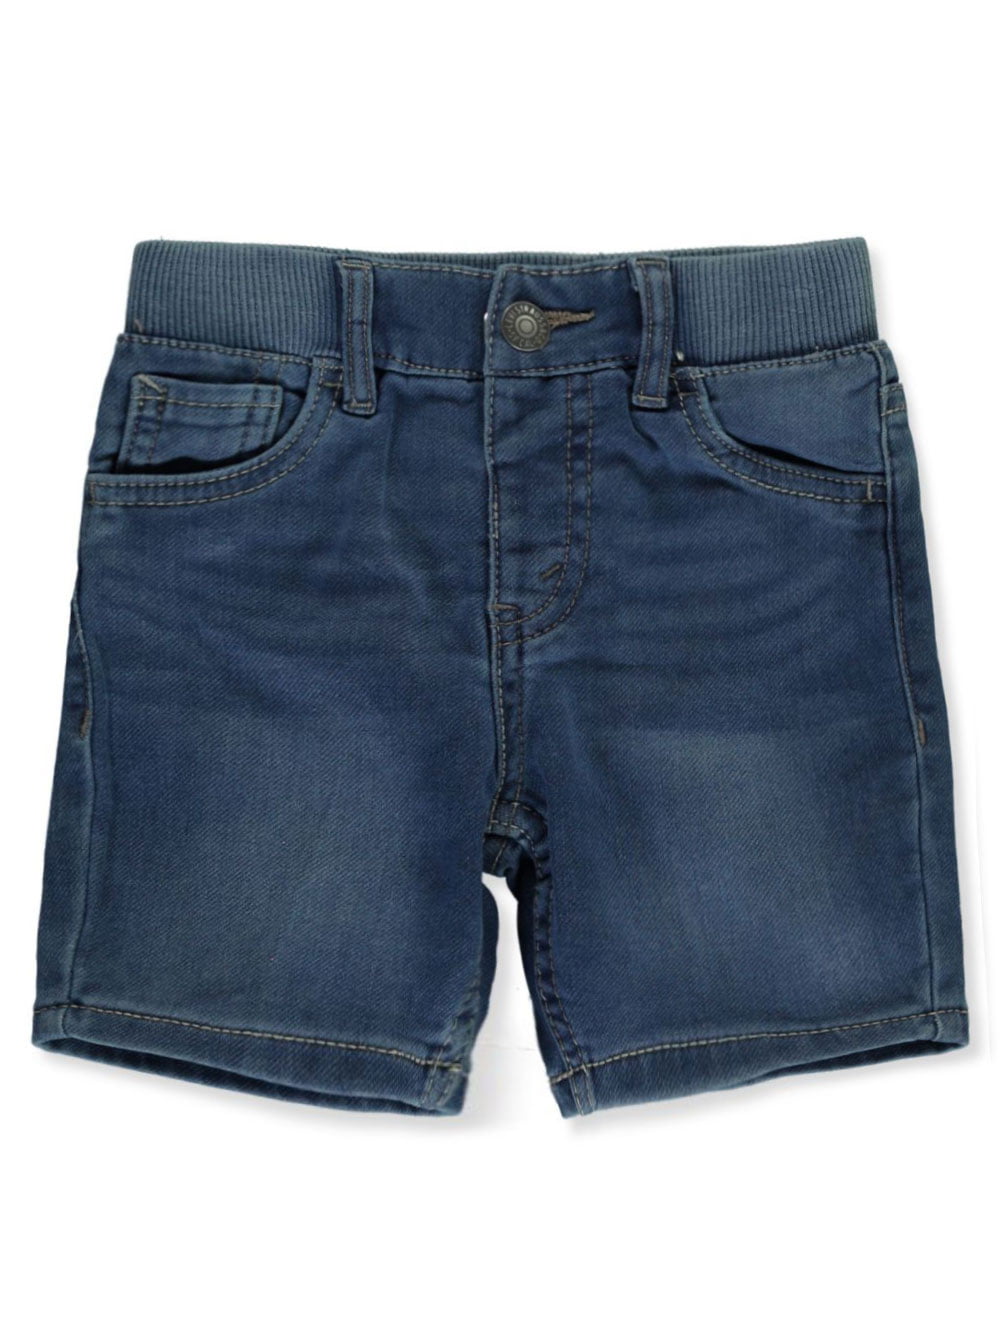 Parish Nation Jean Shorts Men's Size 44 Overdye Denim Short Teal Aqua Urban P488 